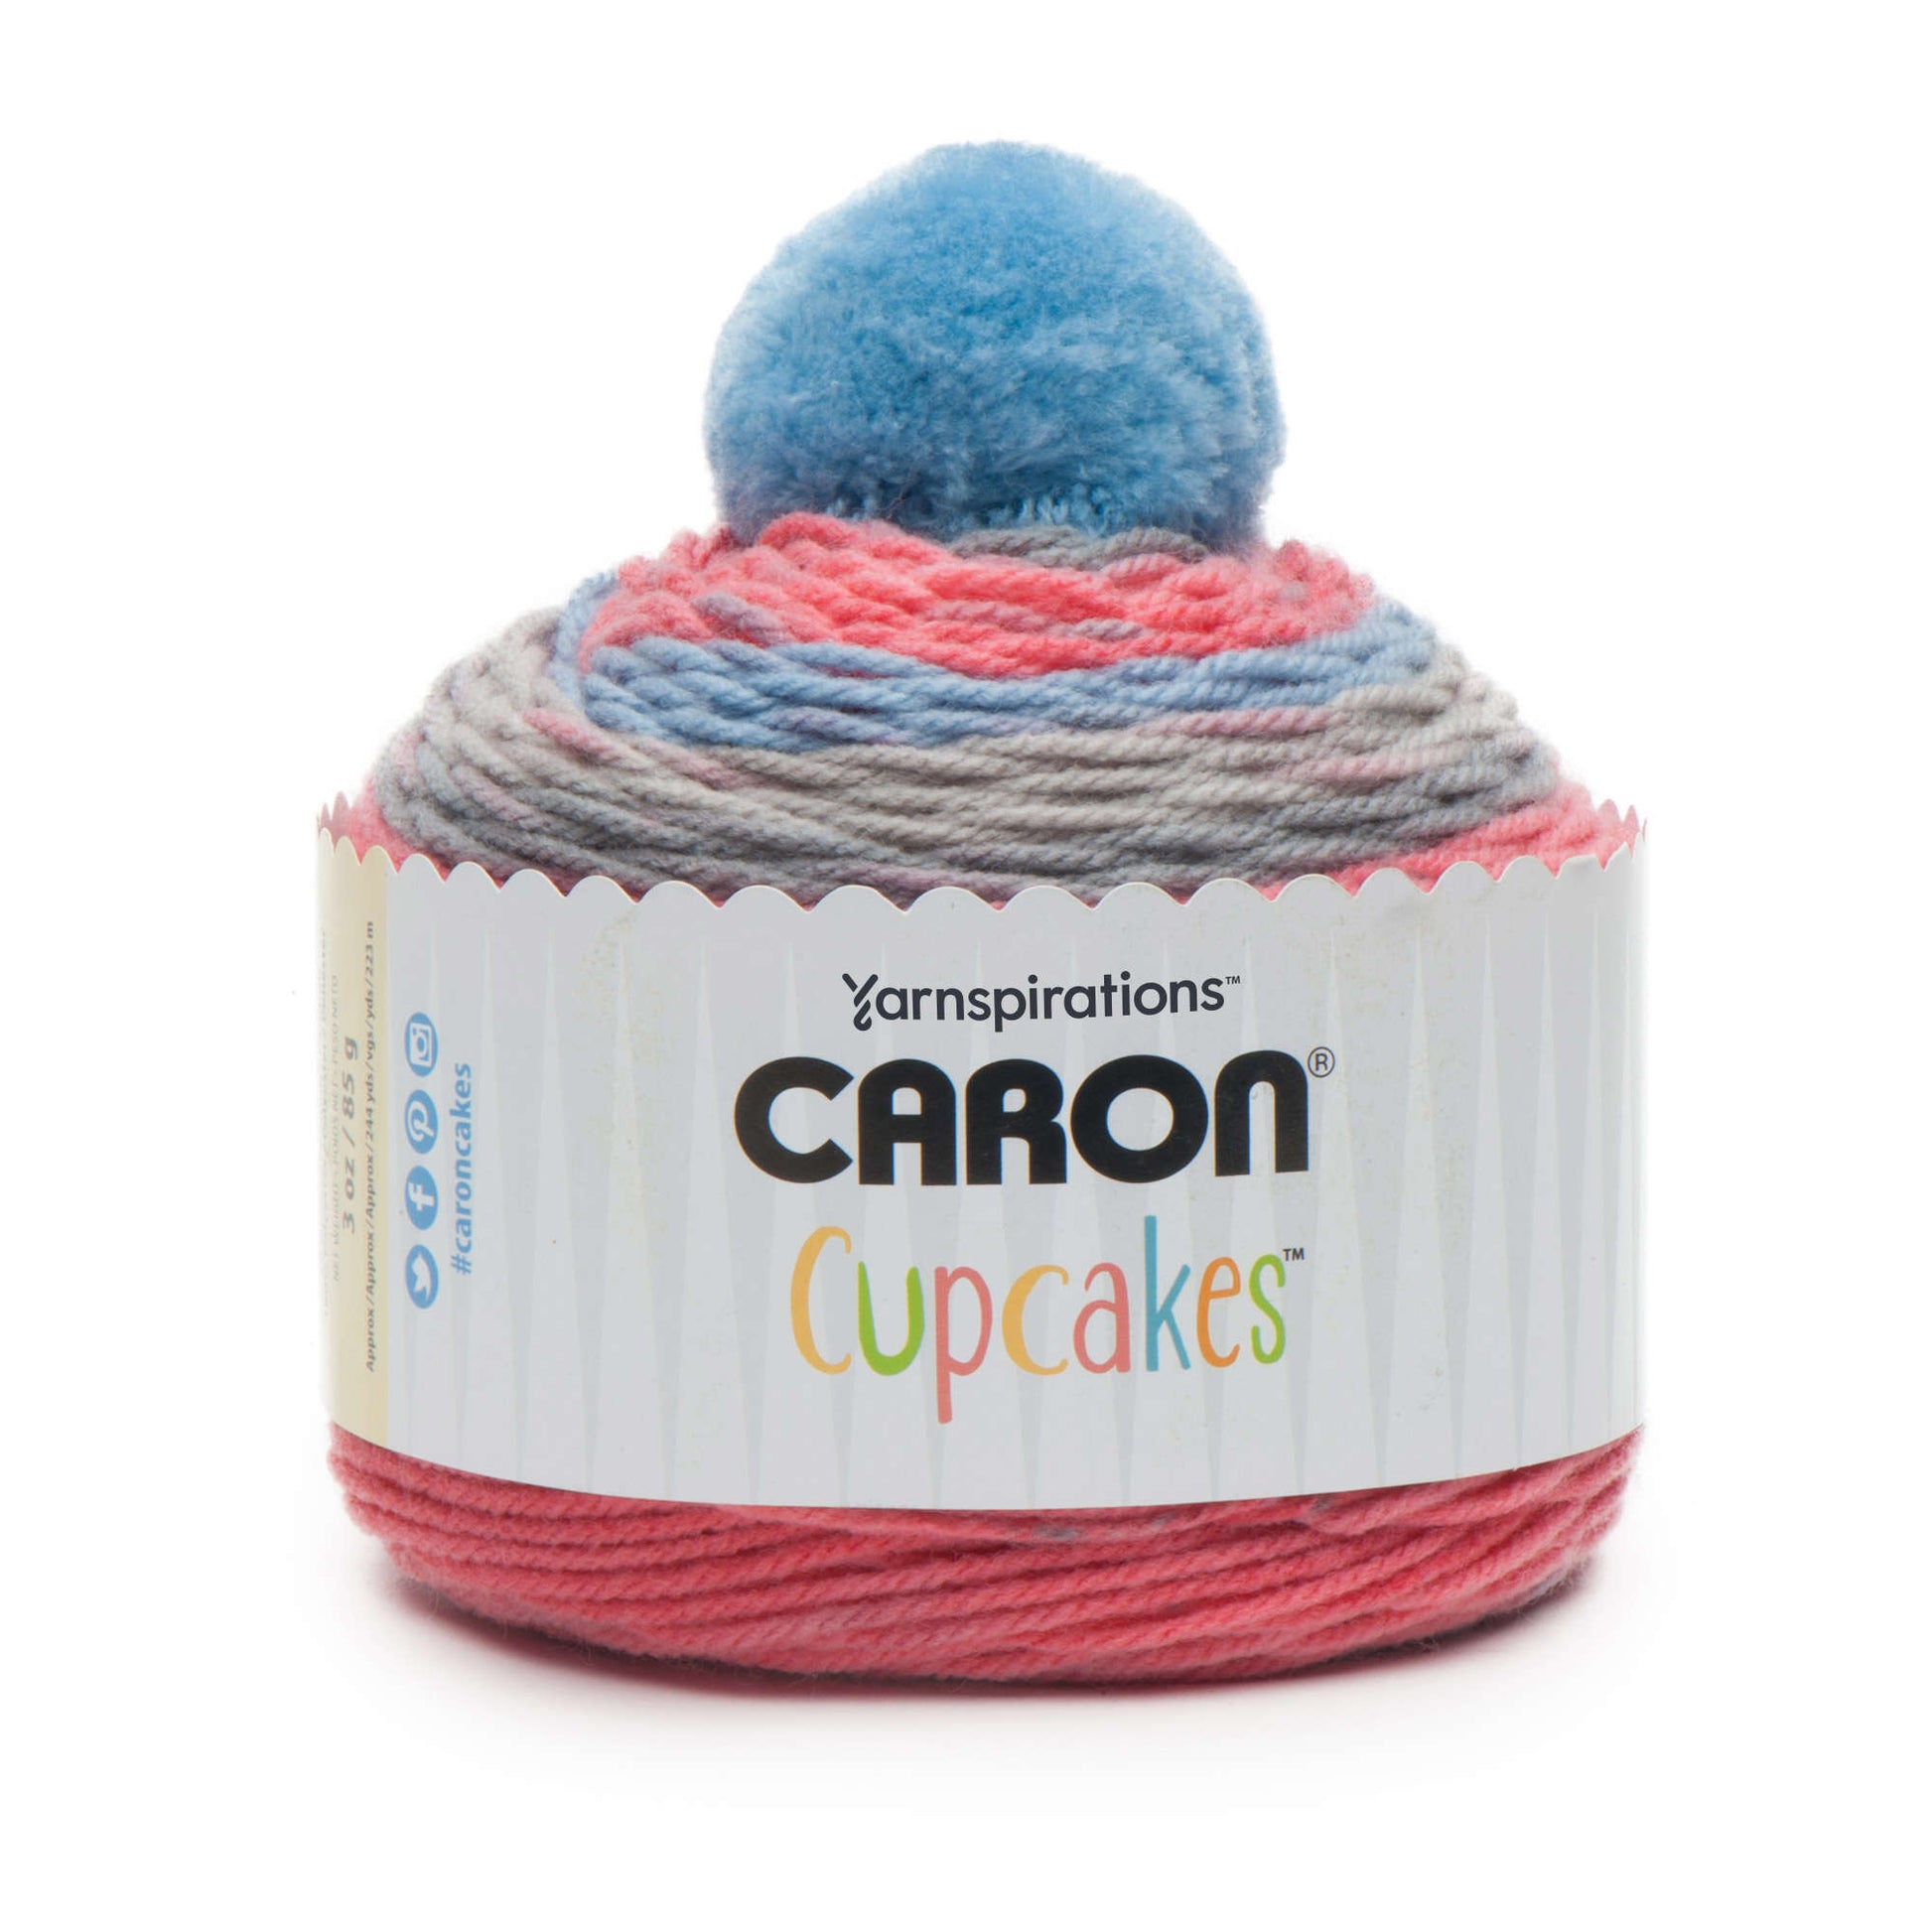 Caron Cloud Cake DK Yarn Pack - Includes 2 x 250g Yarn Packs